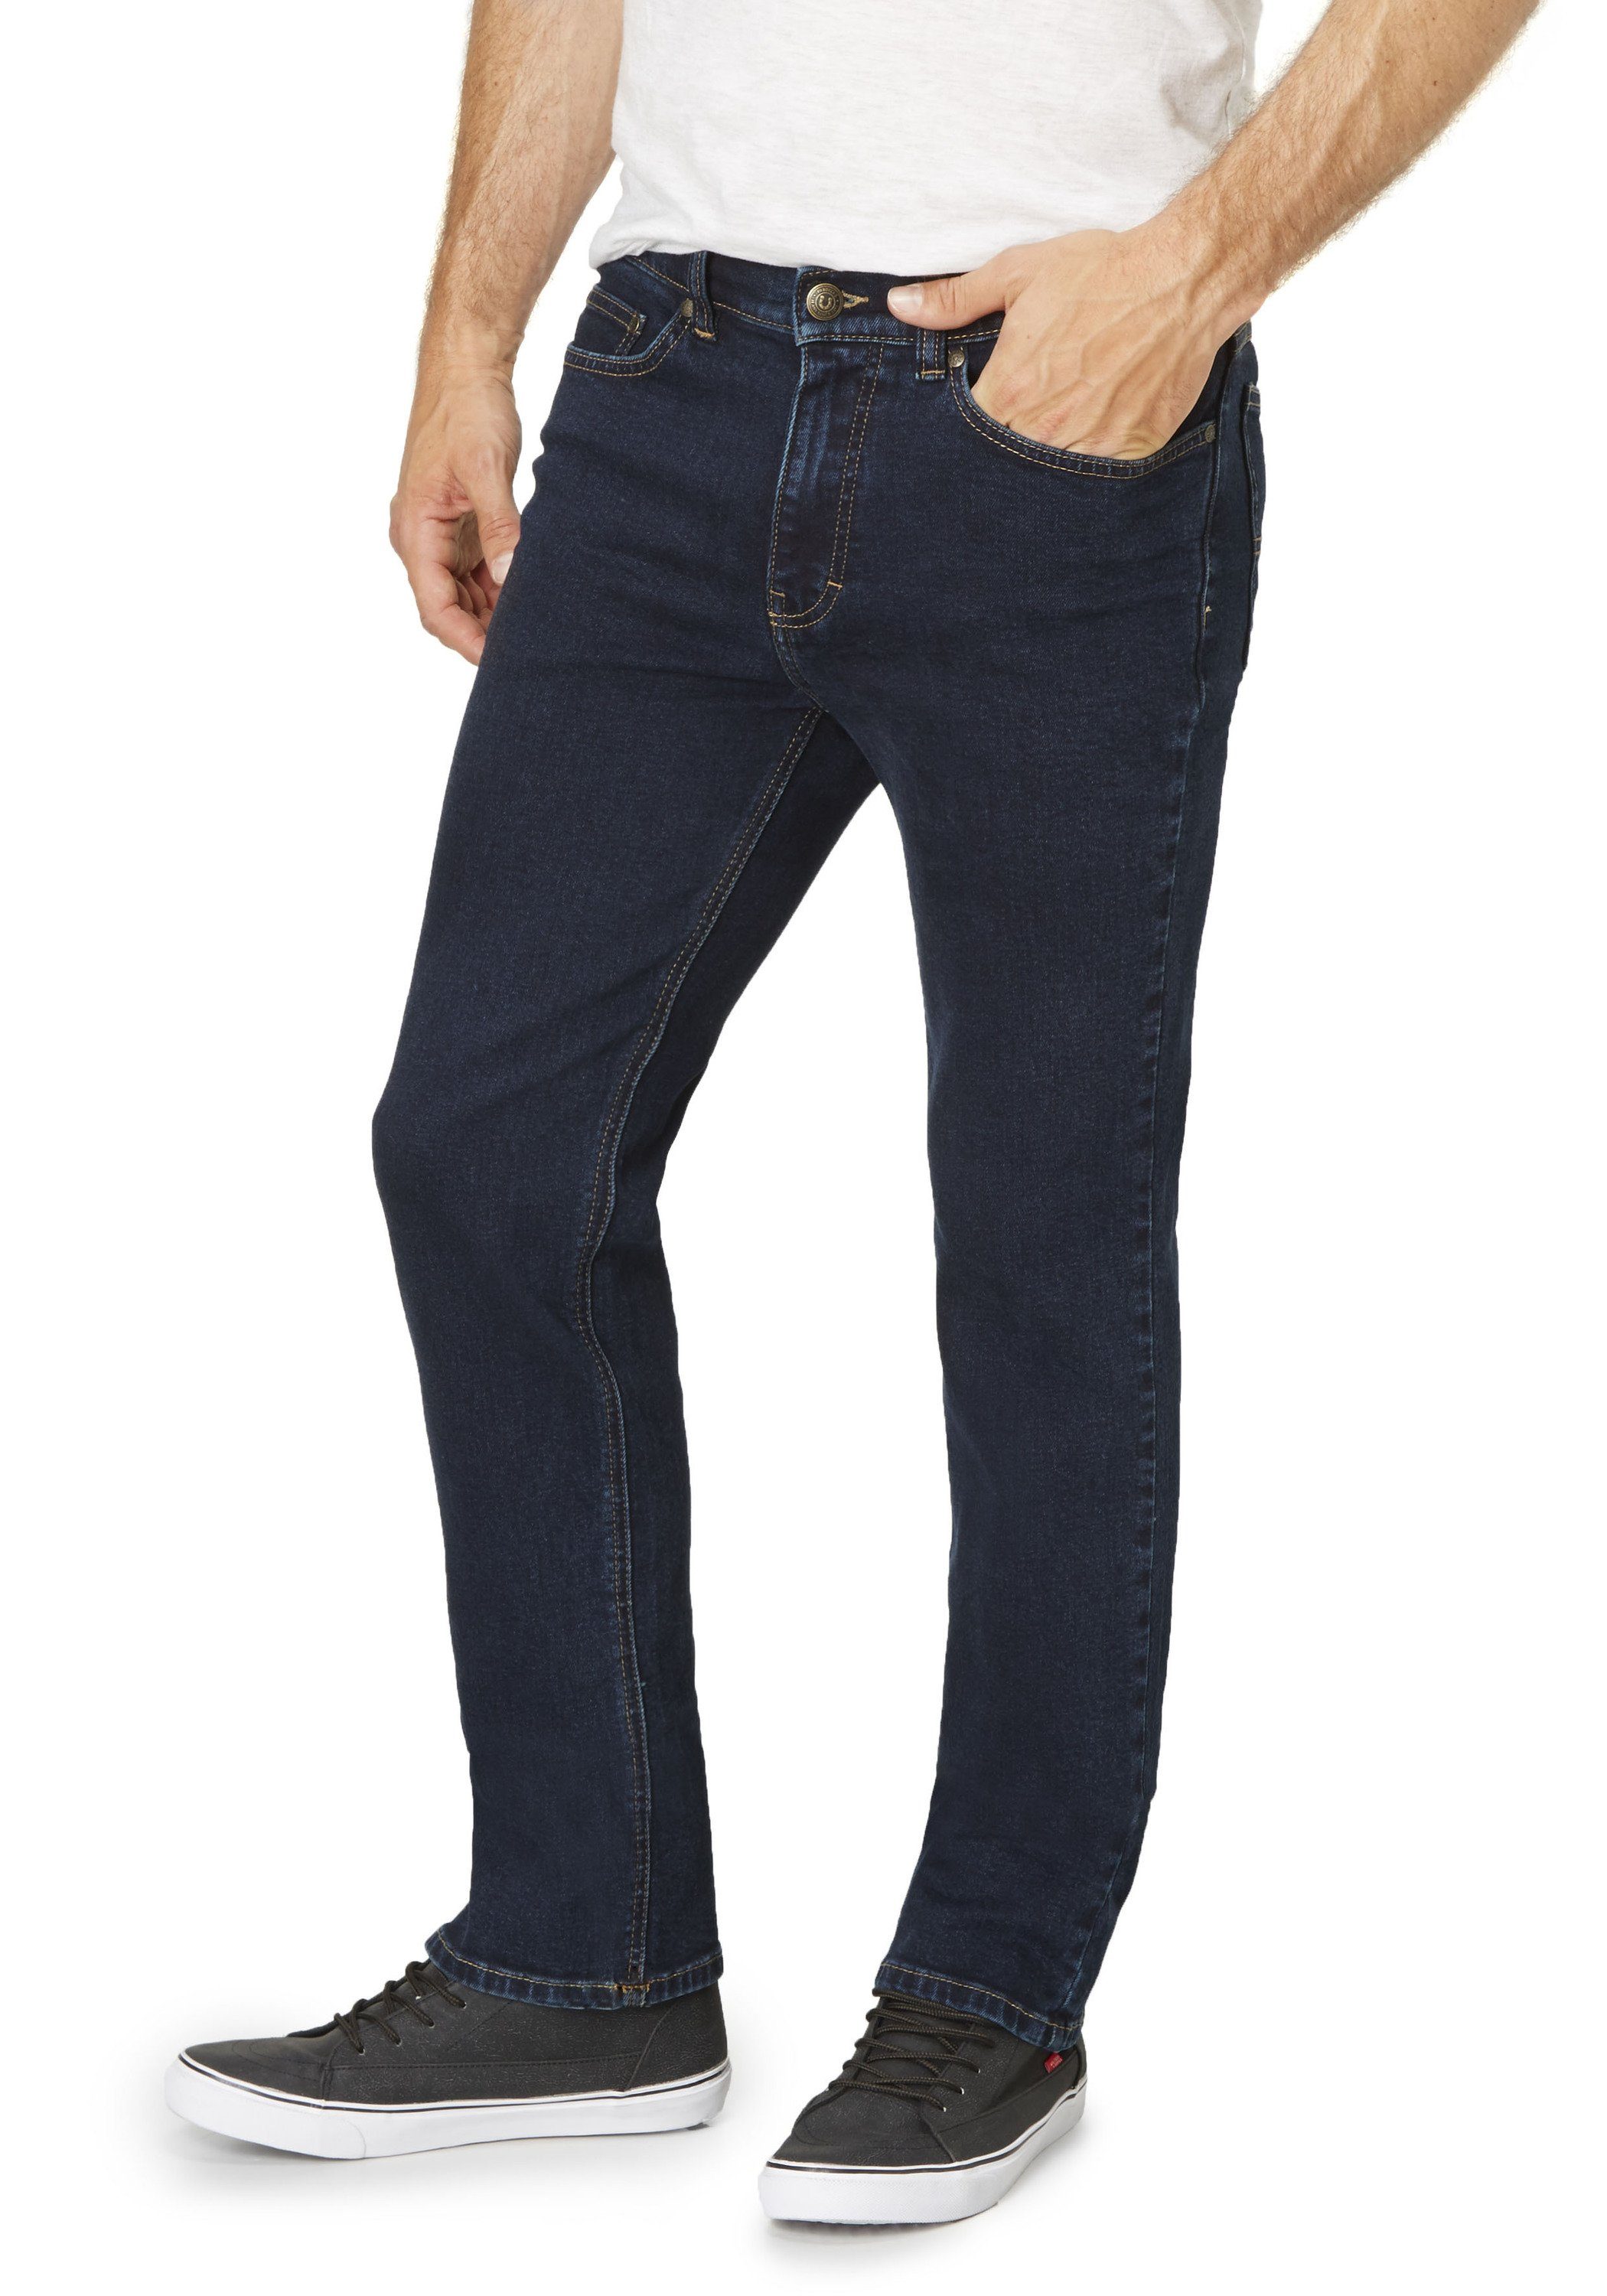 Slim-Fit blue/black Jeans Paddock's mit Slim-fit-Jeans RANGER Stretchanteil